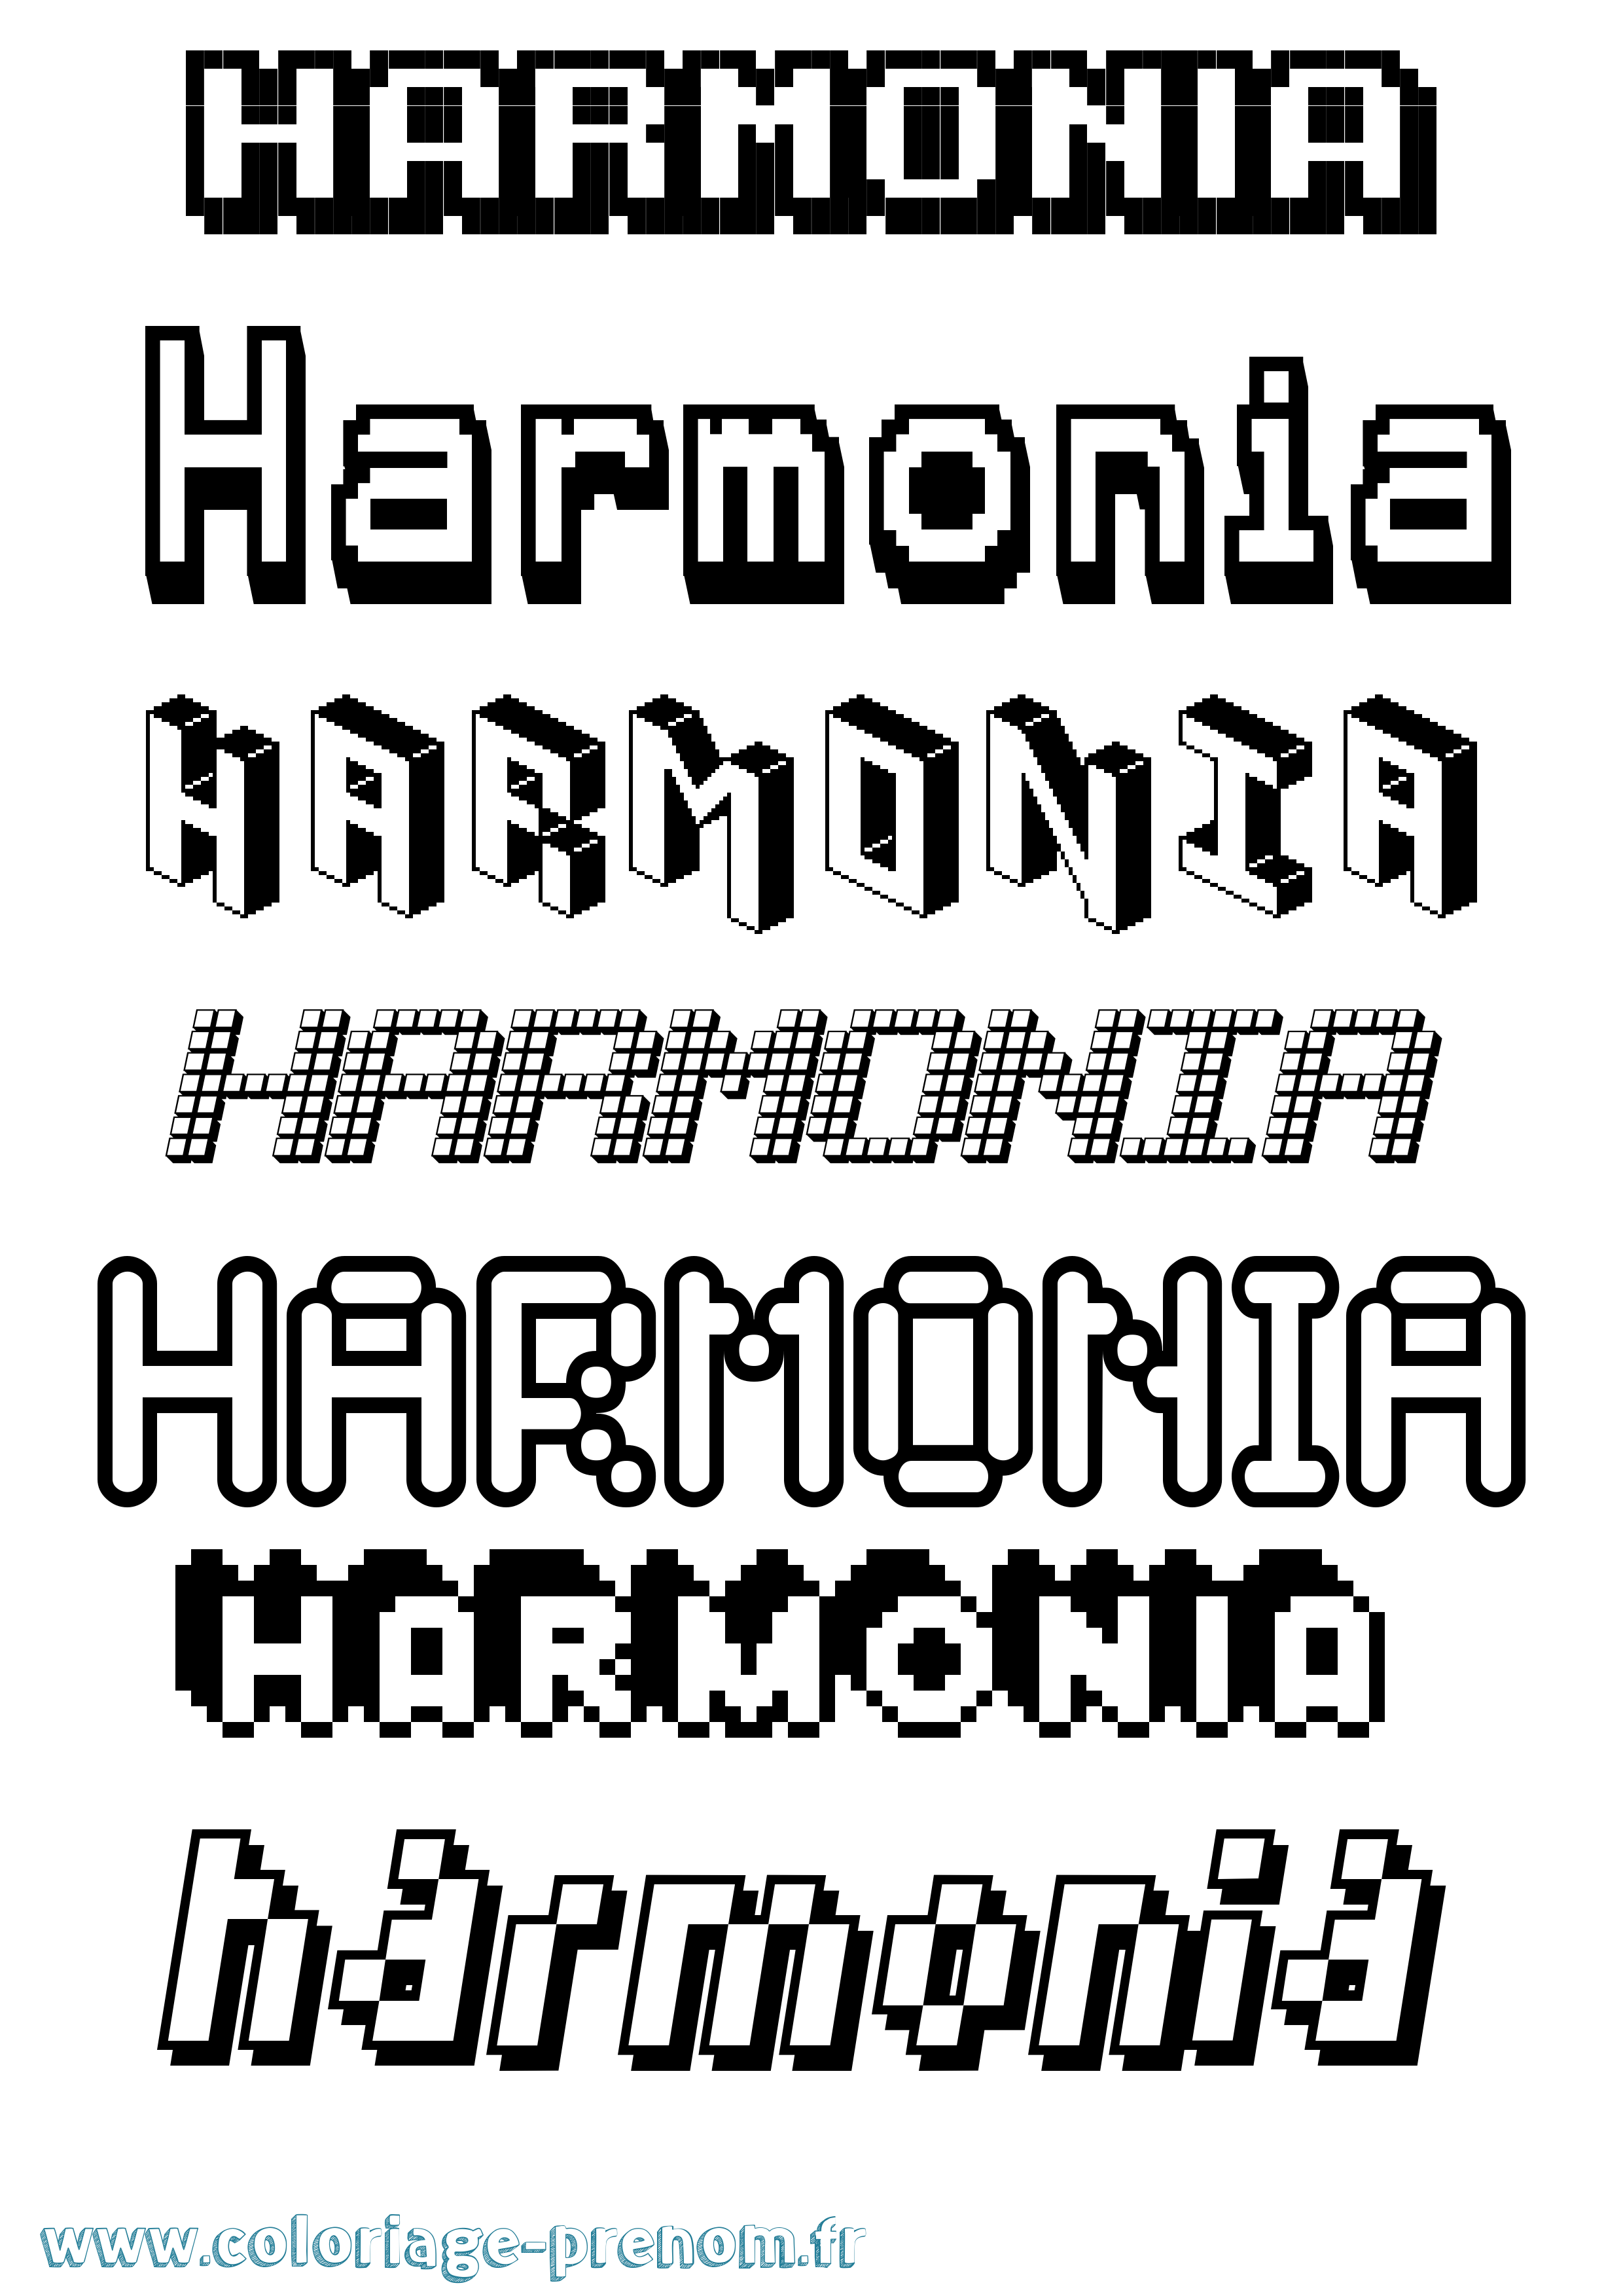 Coloriage prénom Harmonia Pixel